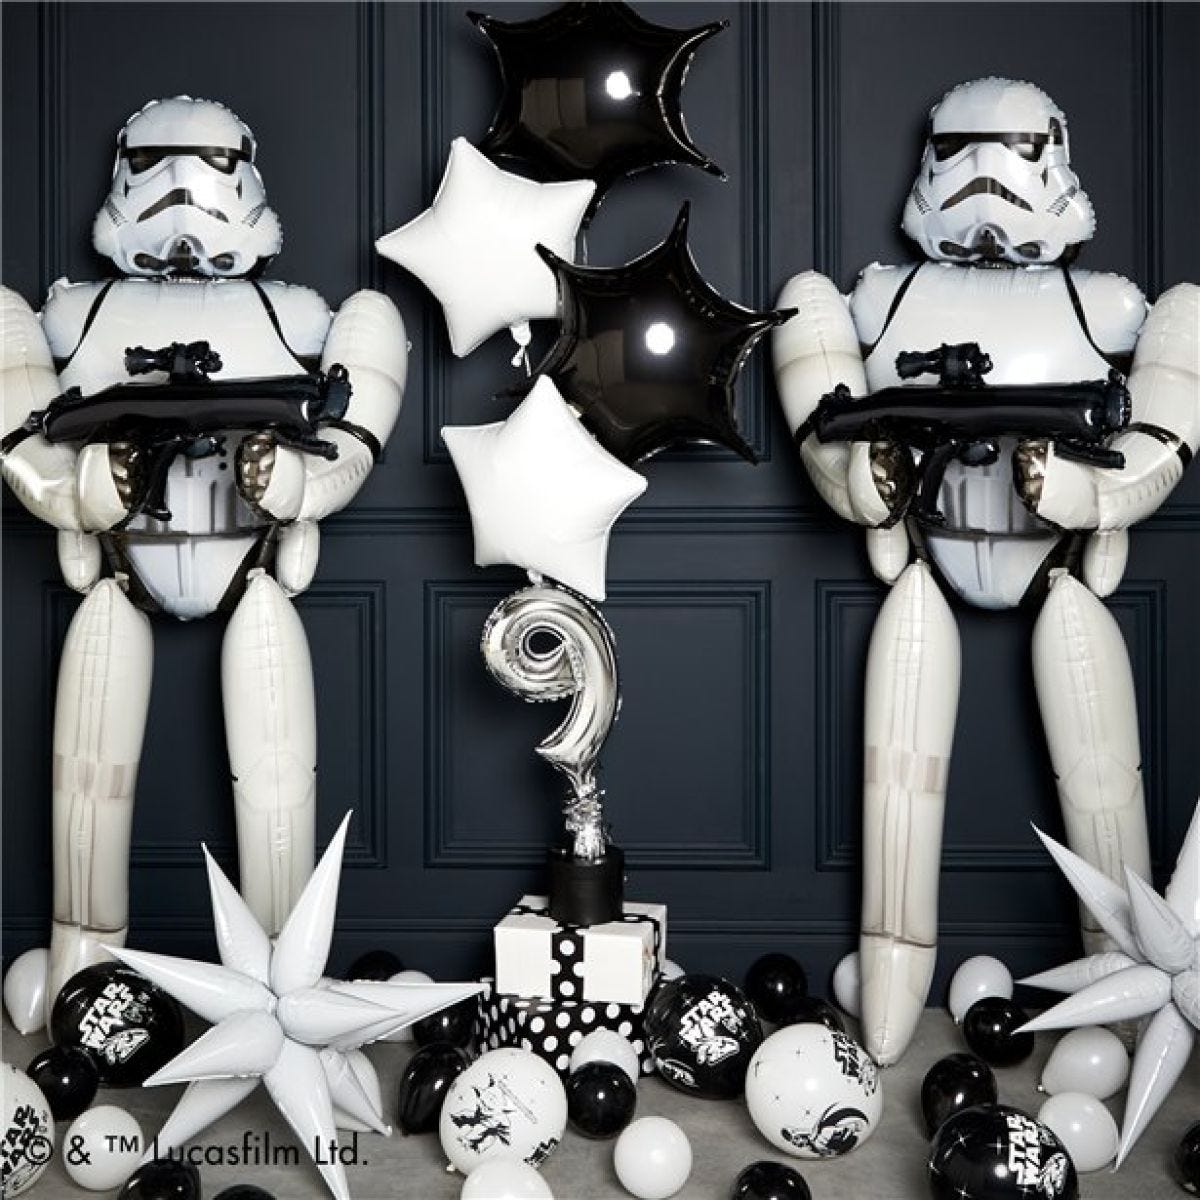 Star Wars Storm Trooper Giant Foil Airwalker Balloon - 70" x 33"